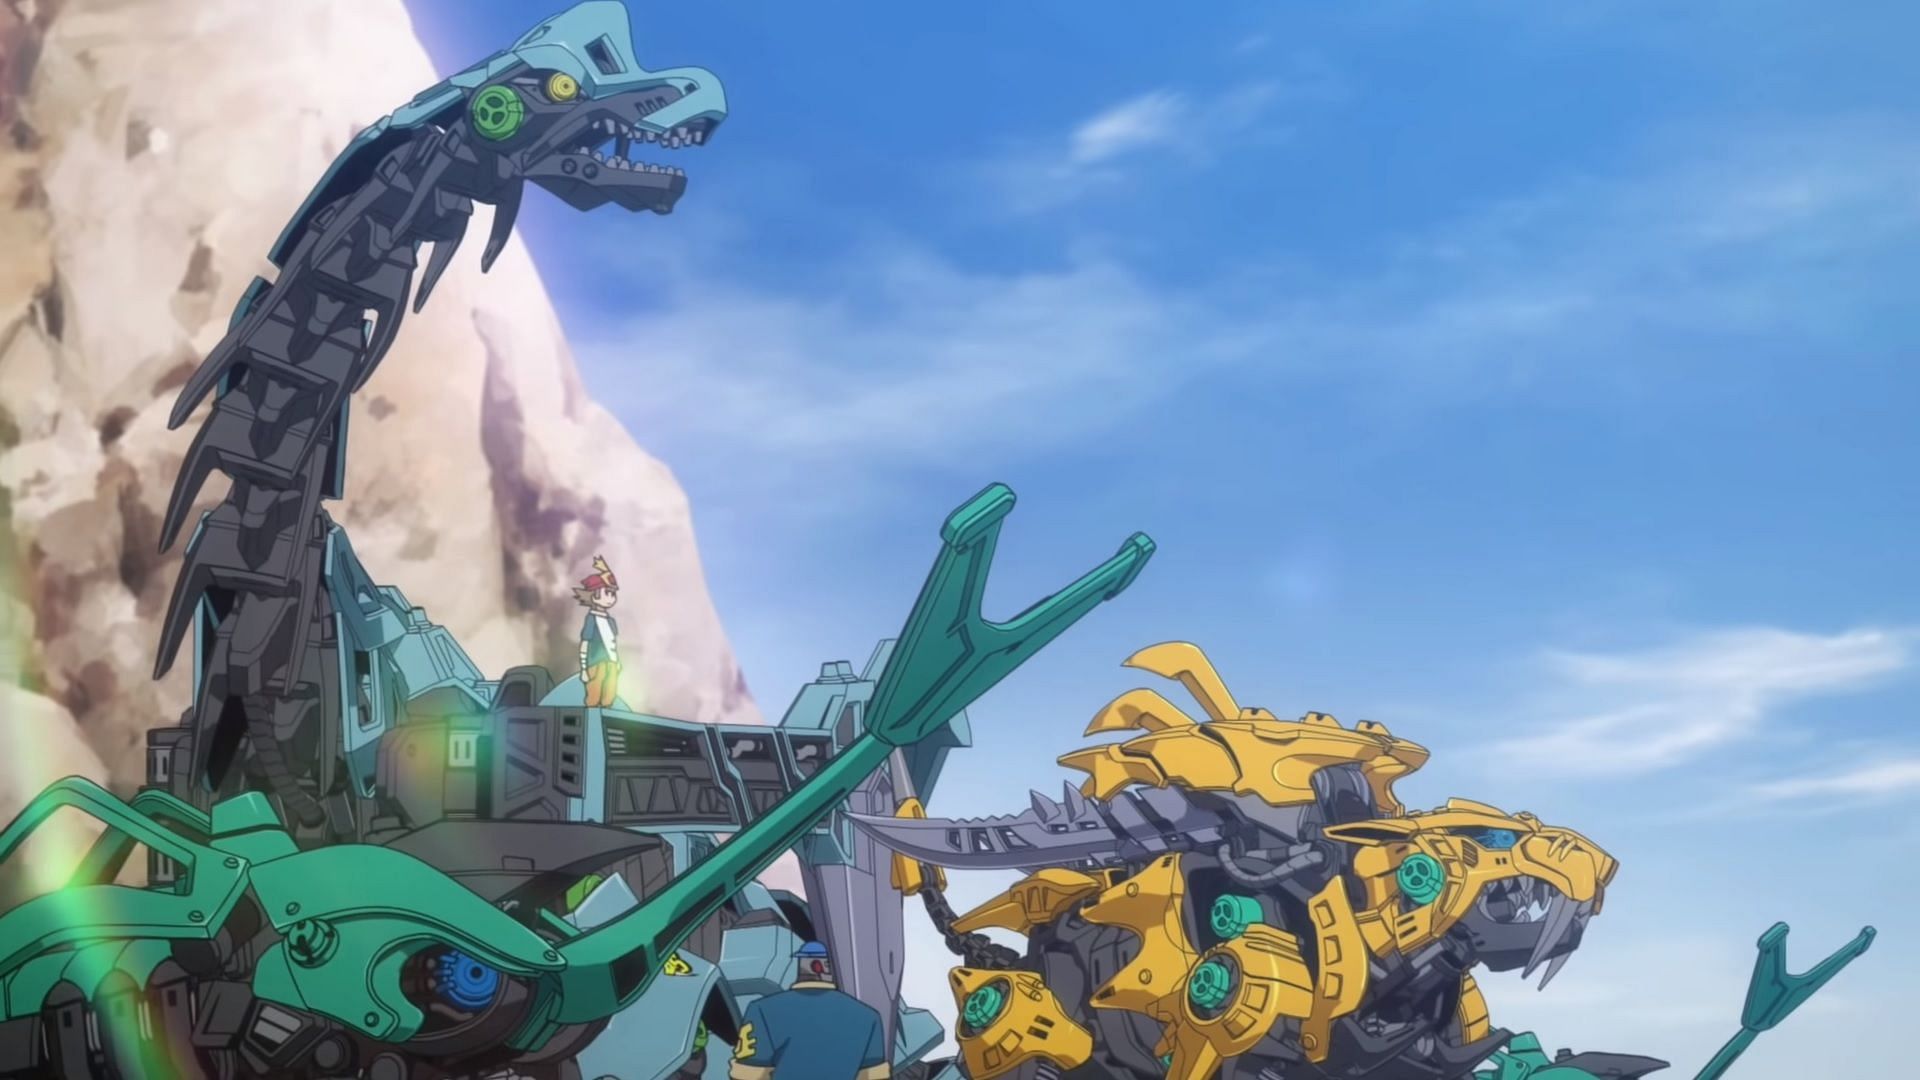 Zoids Wild Senki: New Battle CG Anime Slated For Fall Premiere